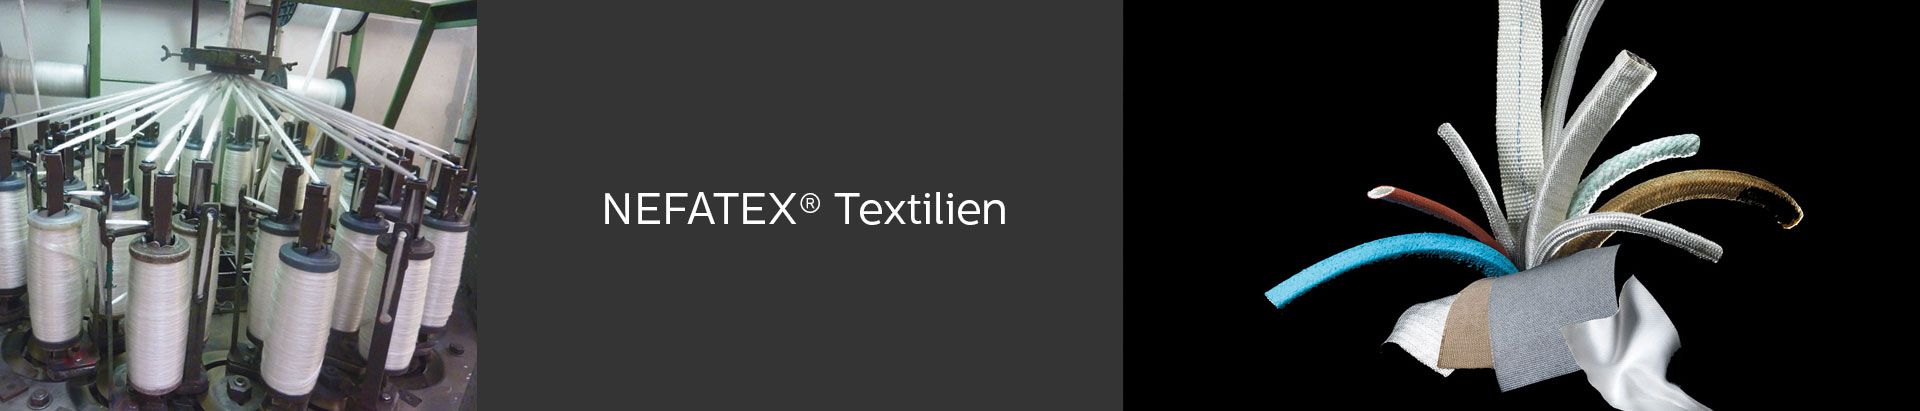 Textiles-NEFATEX-de